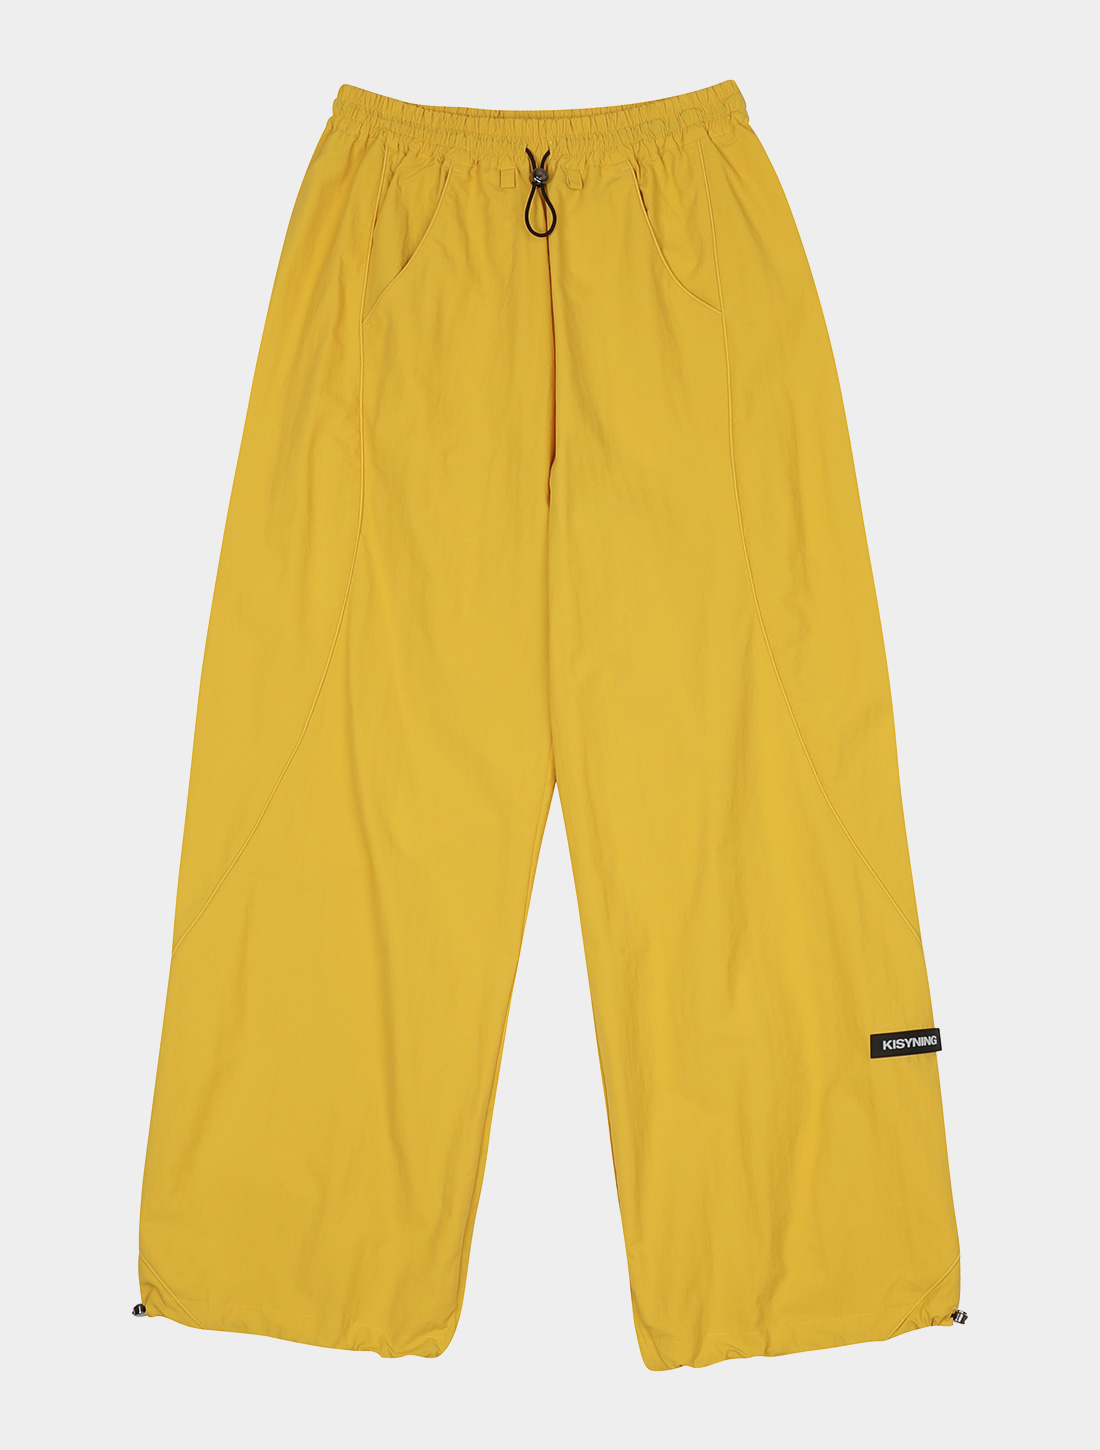 KISY point label line pants (yellow)